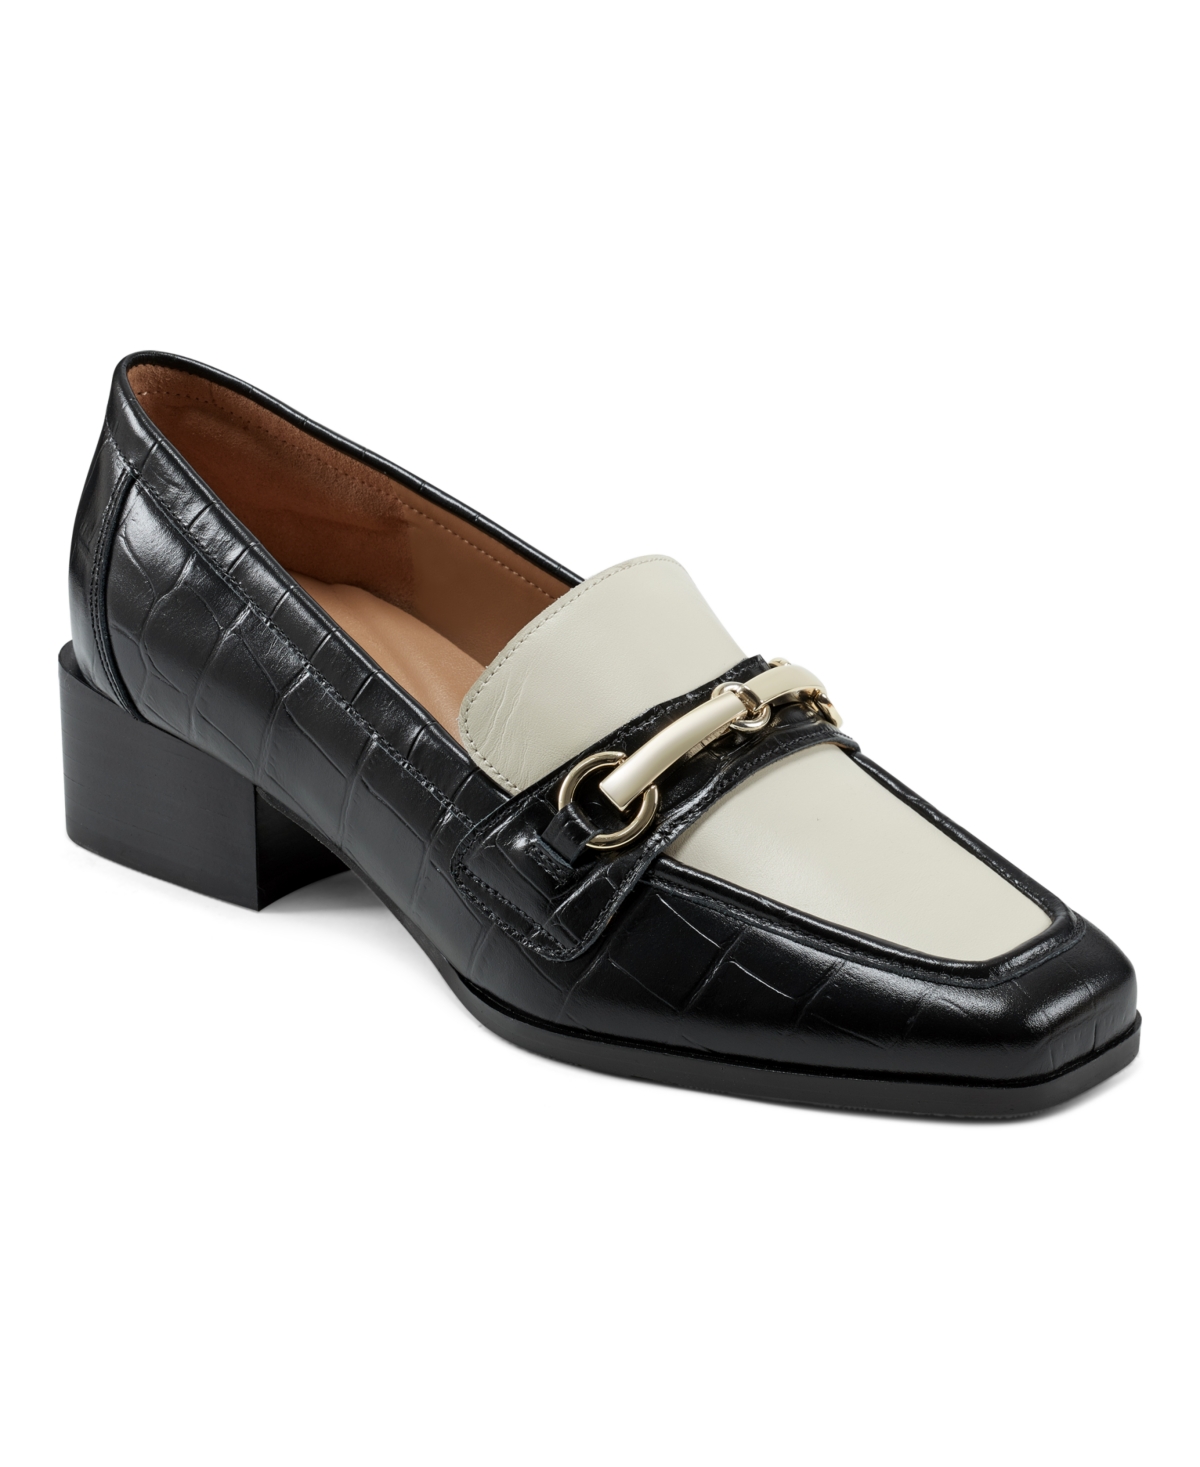 Women's Darby Block Heel Slip-On Dress Loafers - Black Croco, Ivory Leather